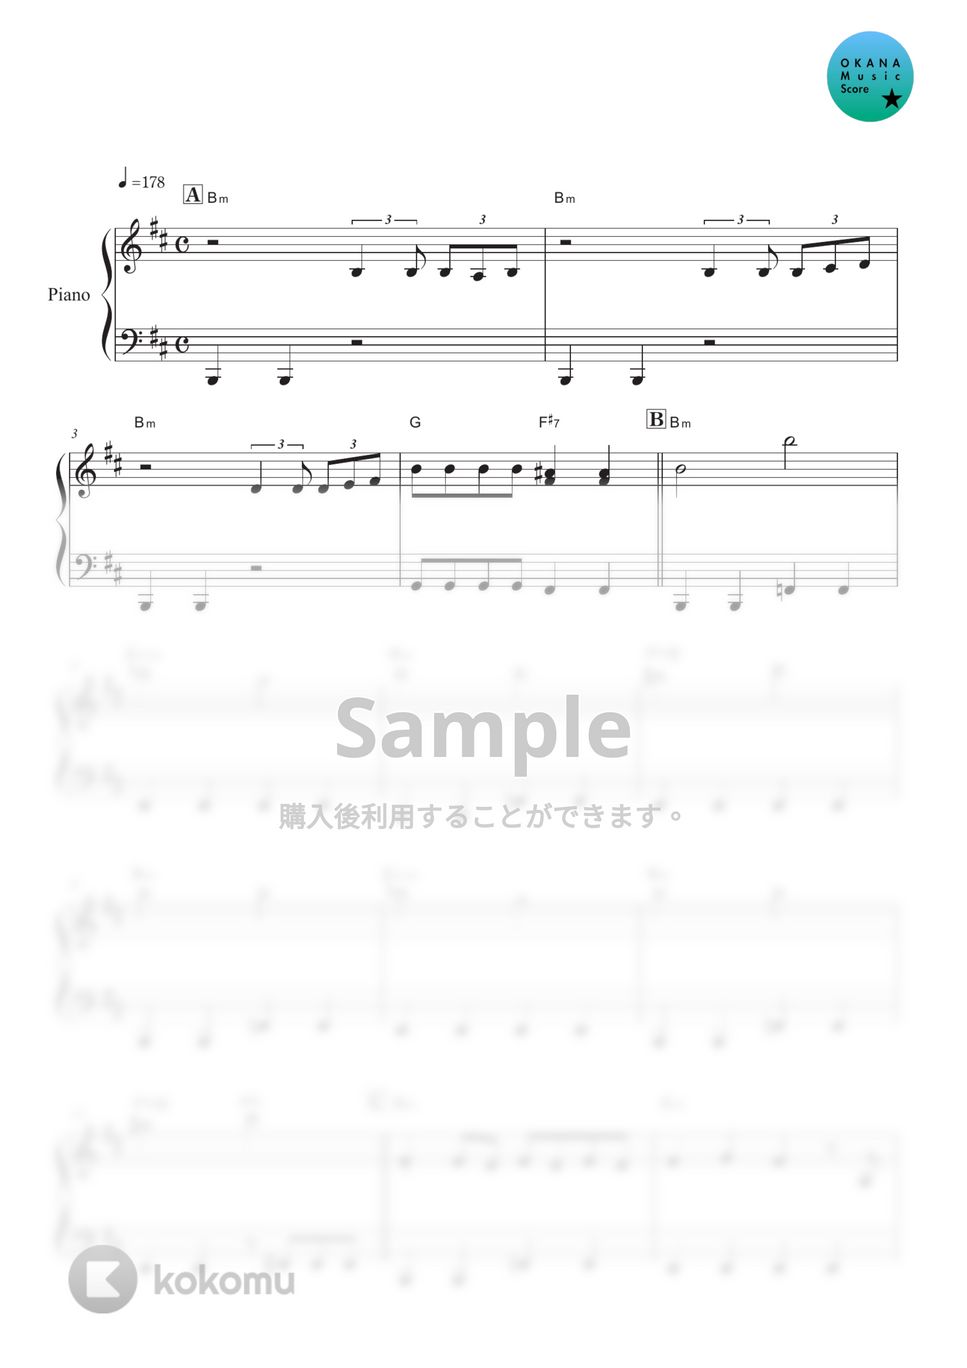 Ado - うっせぇわ (ピアノ初級／Short／歌詞・コード) by OKANA